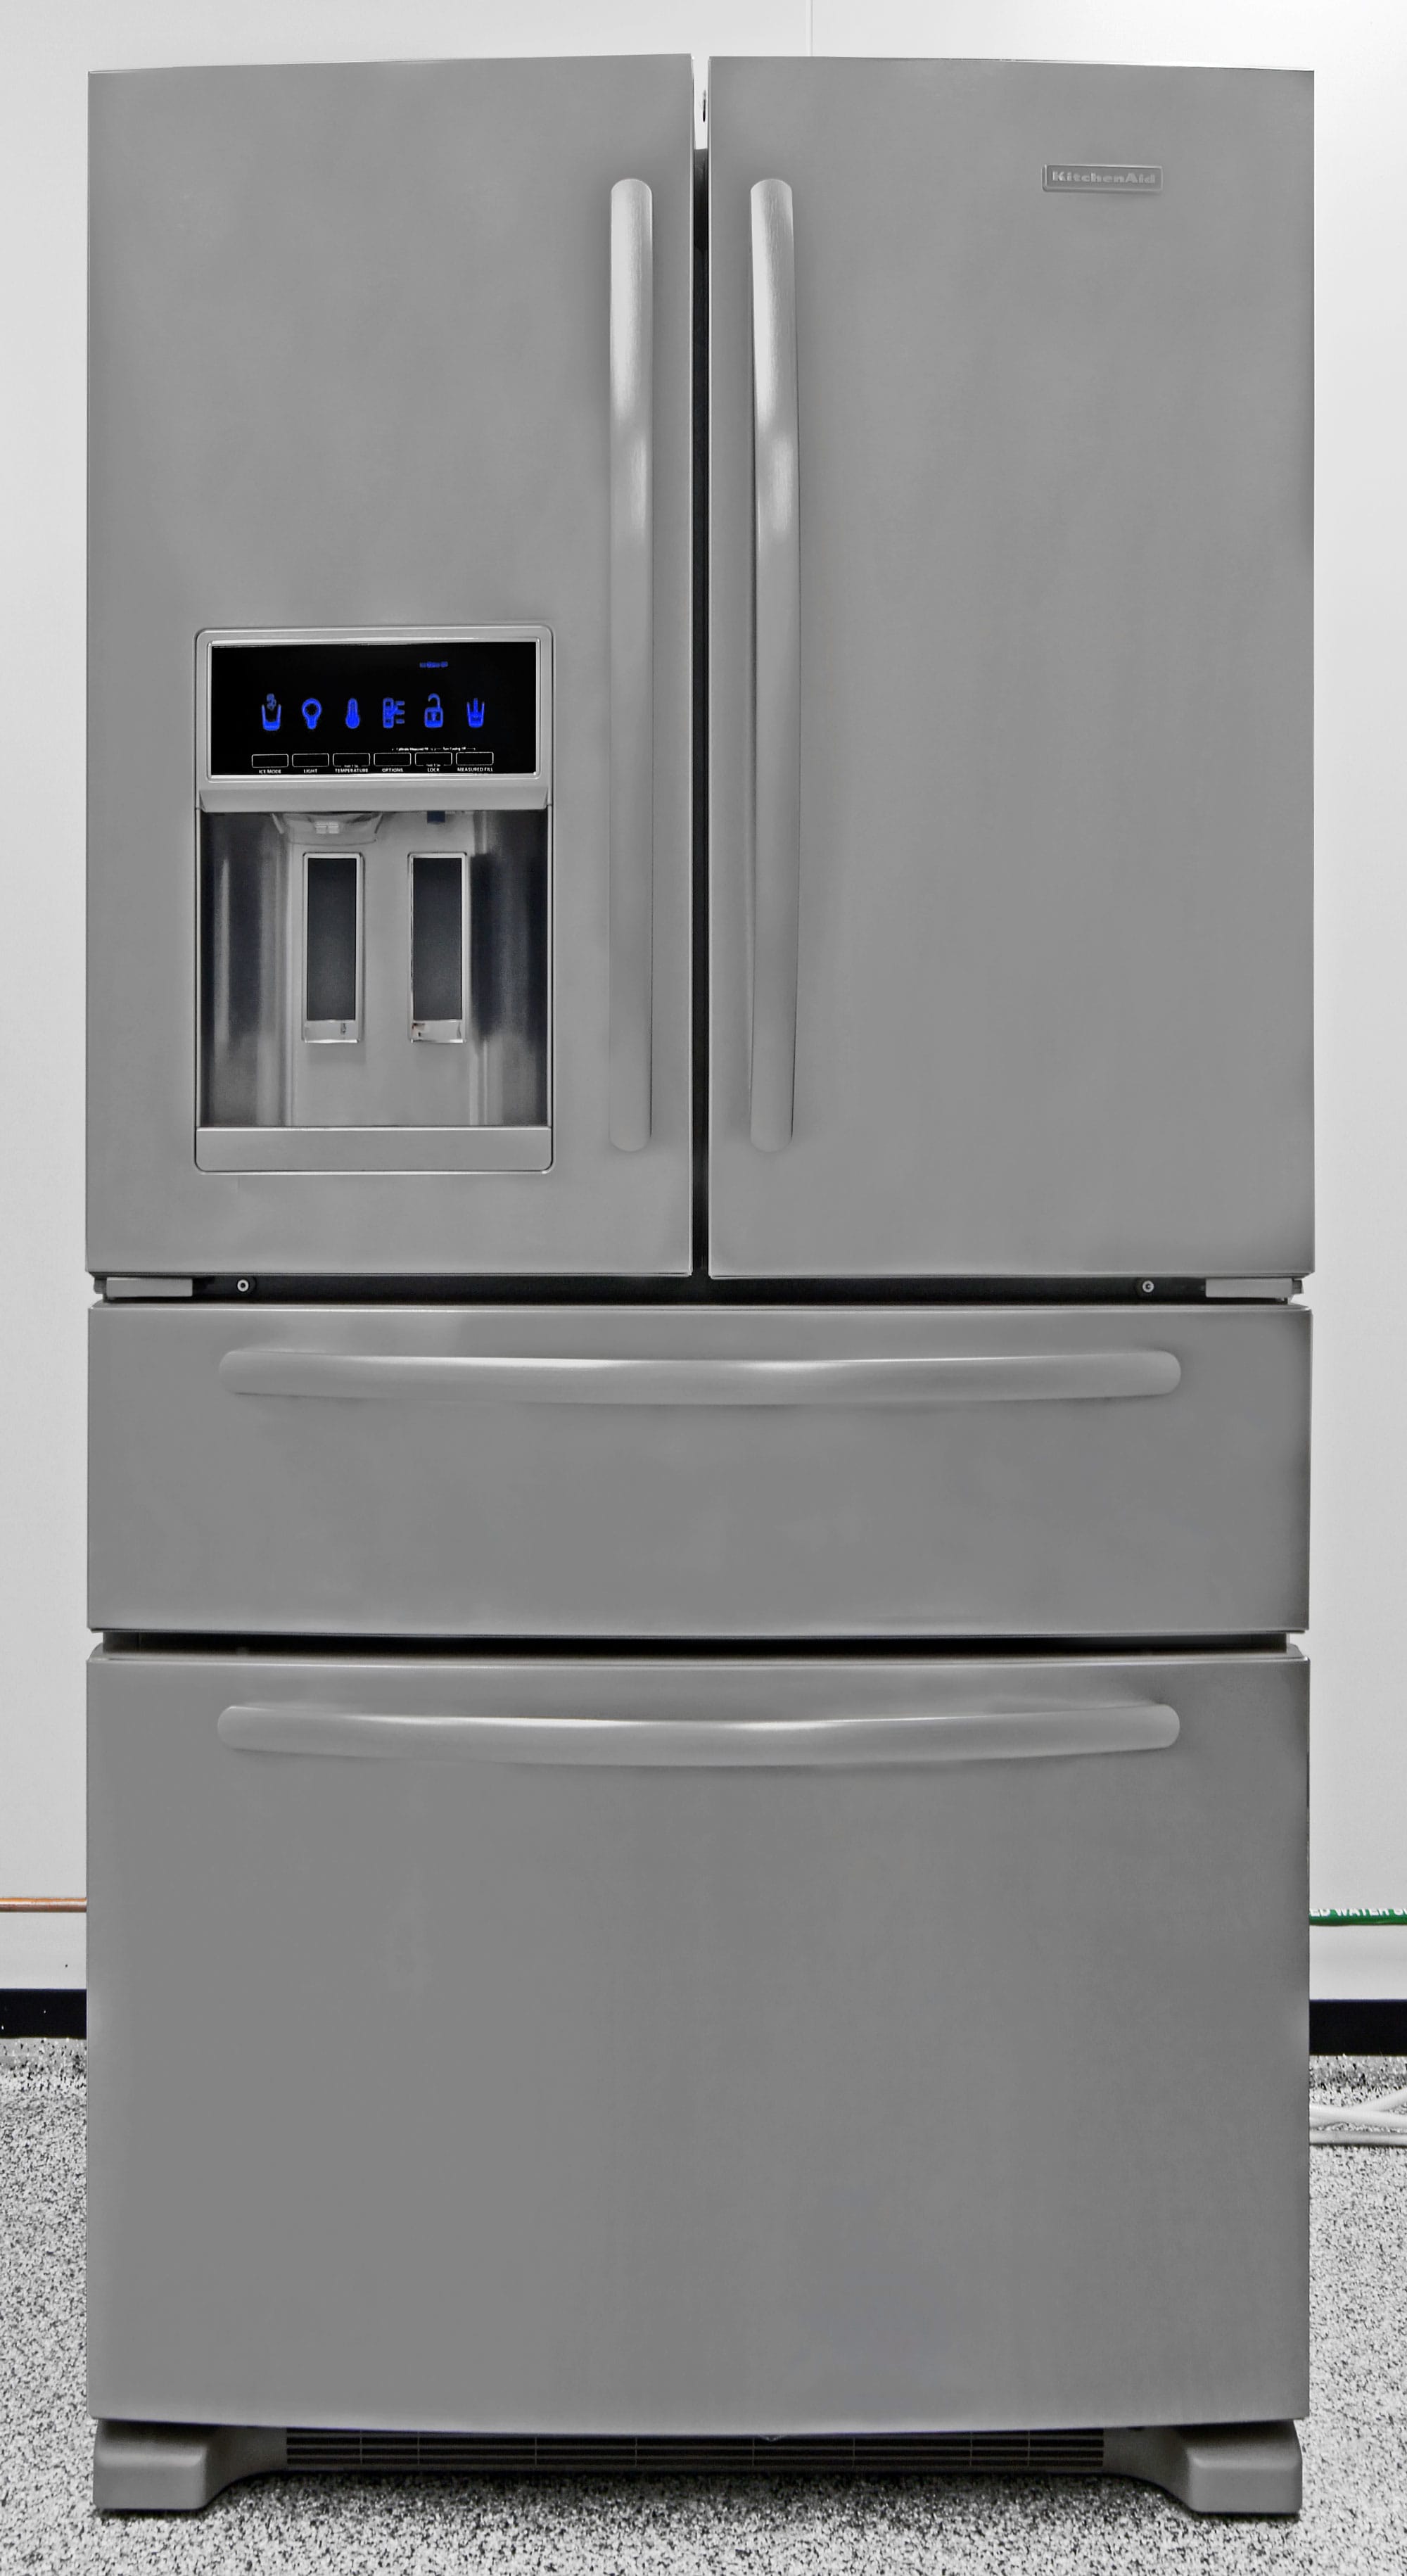 kitchenaid superba 42 refrigerator manual